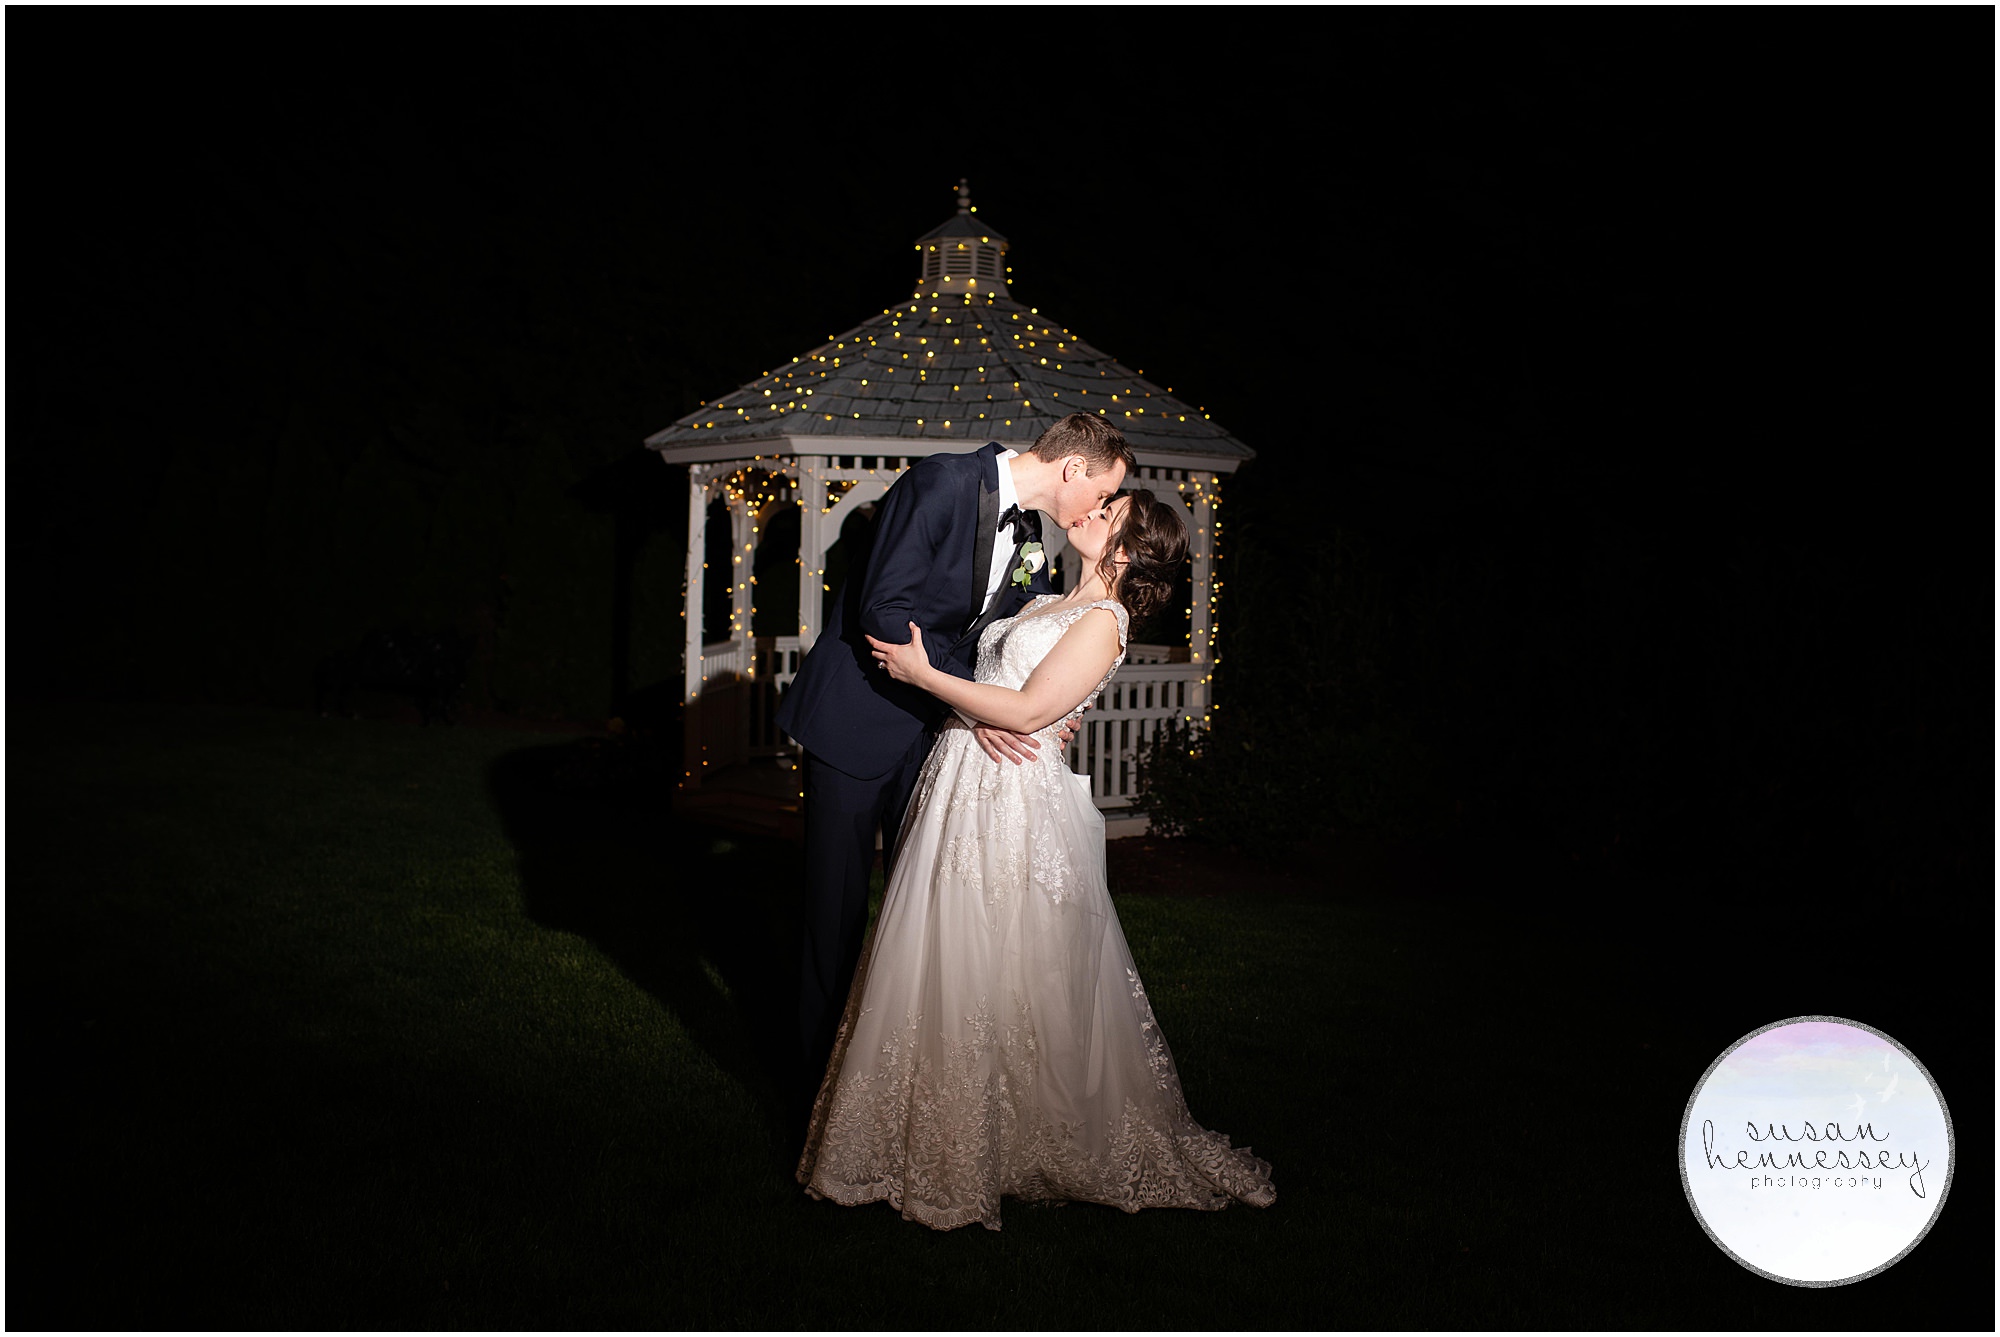 Romantic night portrait in front of the gazebo at the Bradford Estate wedding